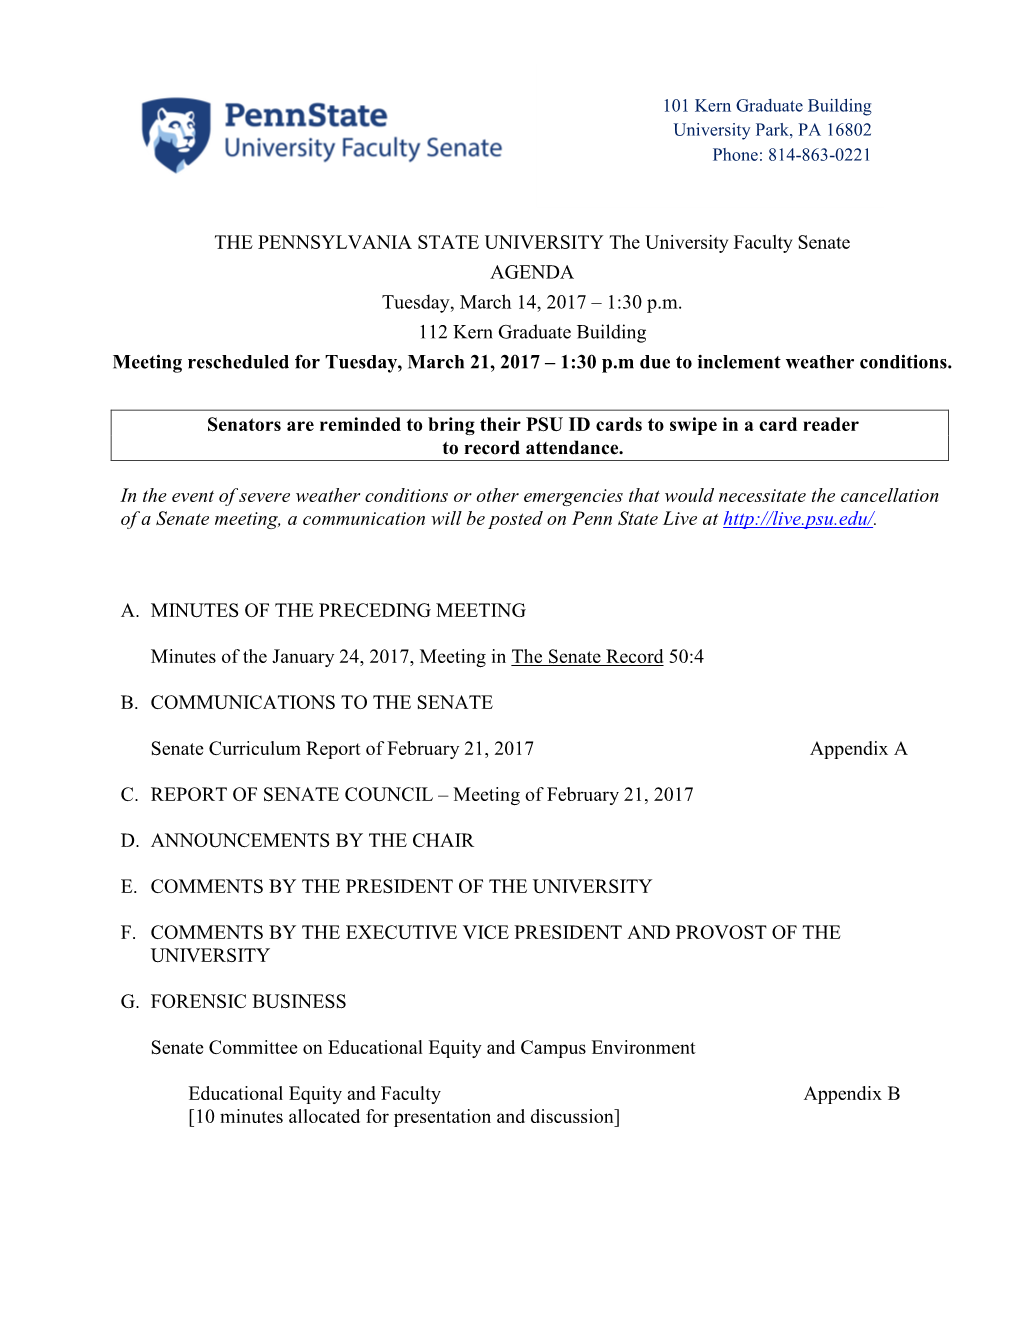 View Full Agenda (PDF)